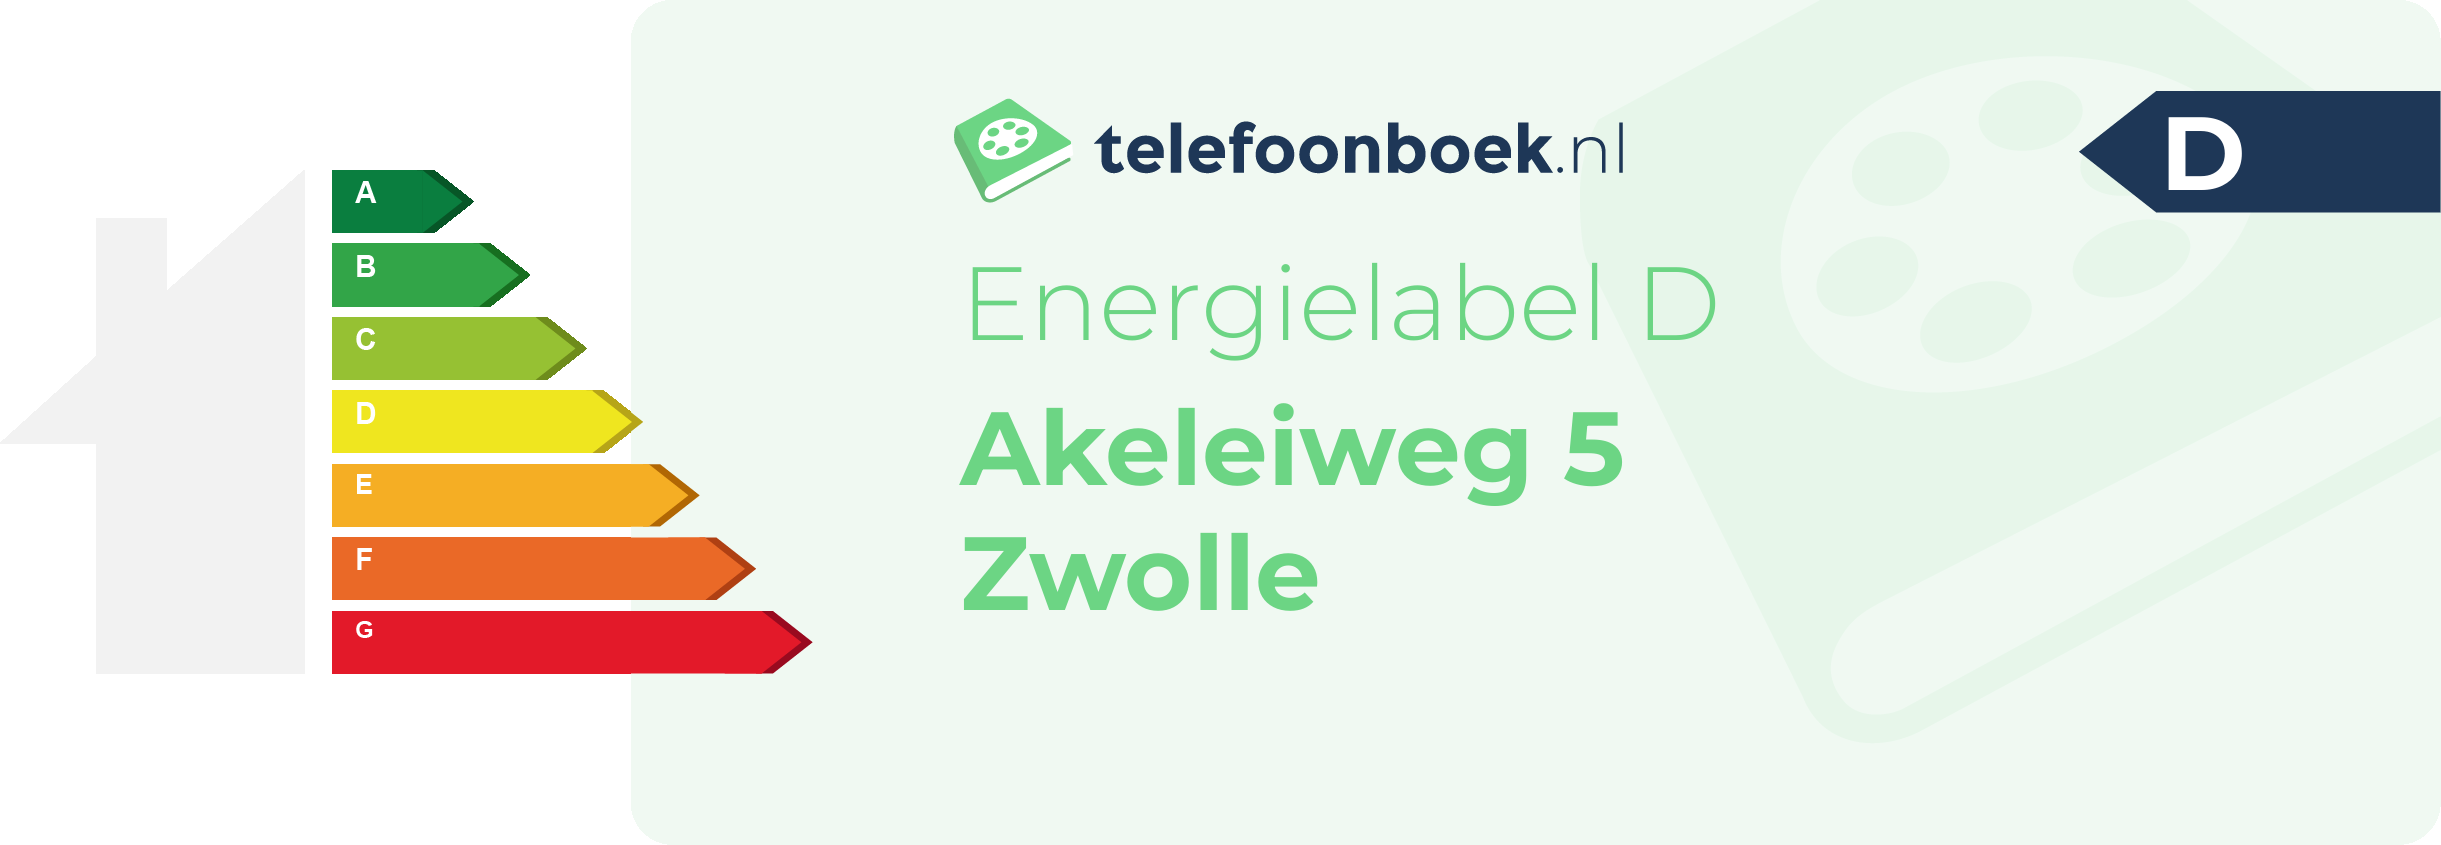 Energielabel Akeleiweg 5 Zwolle